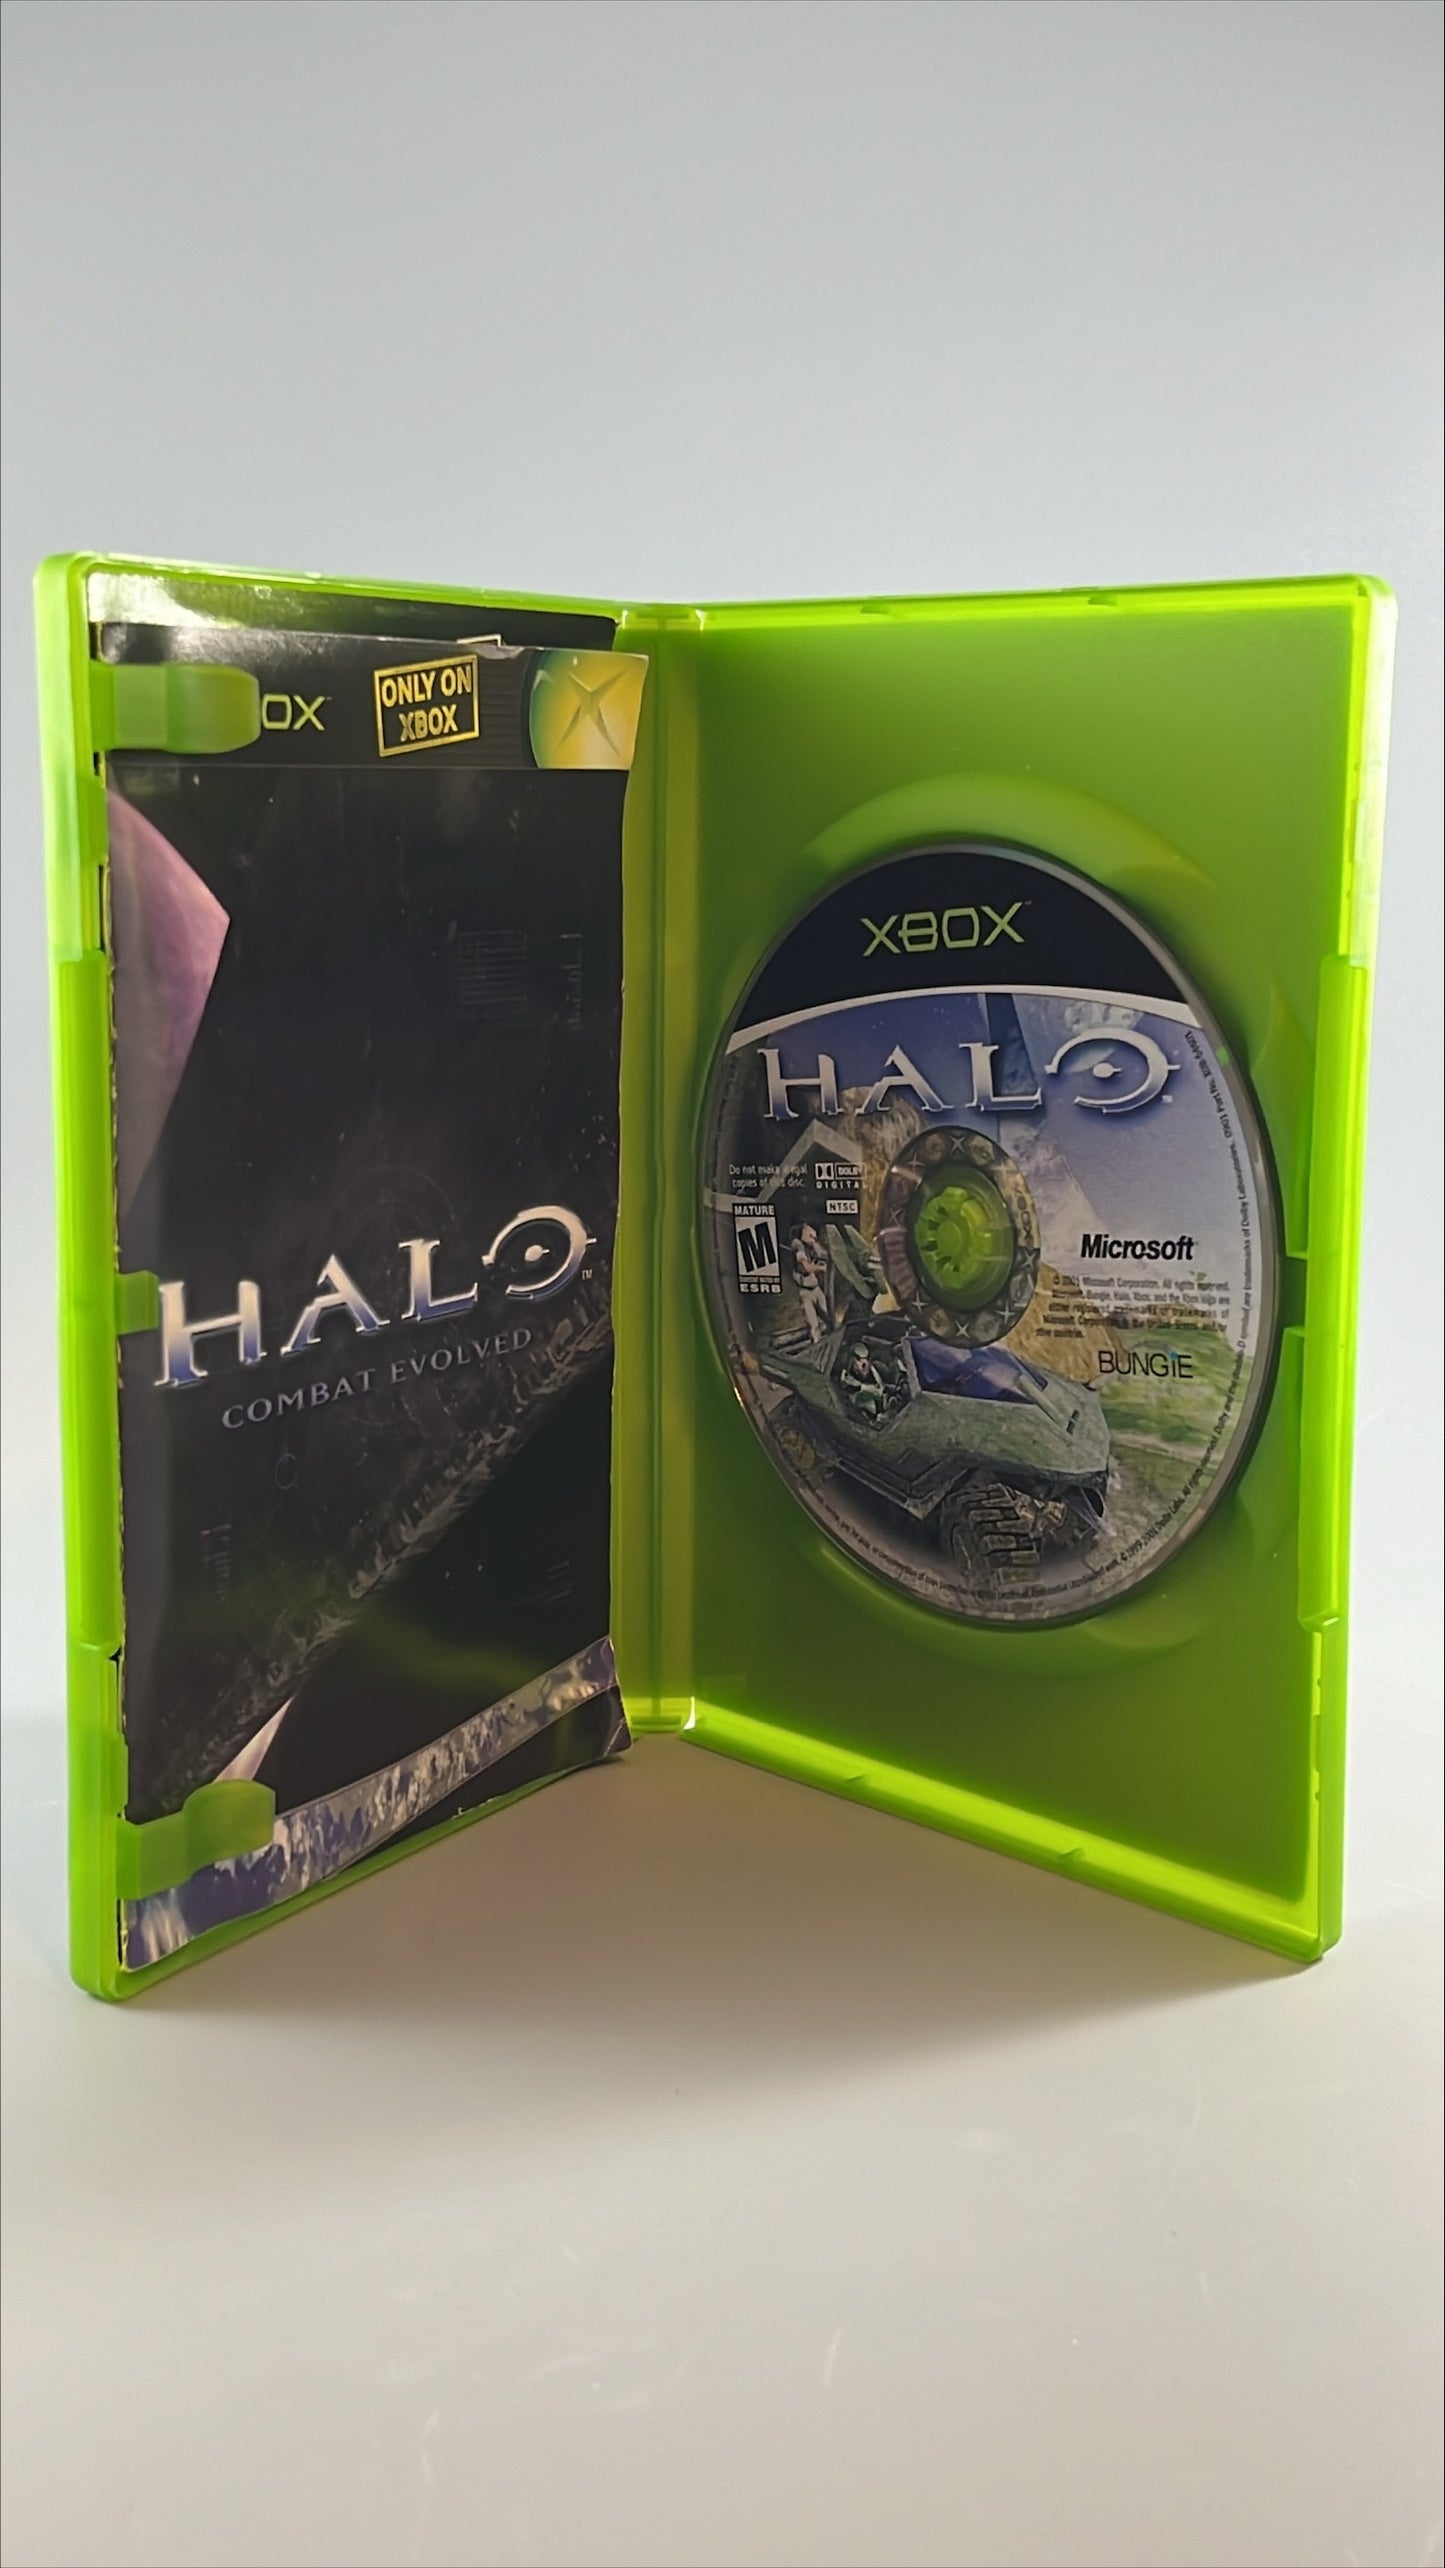 Halo: Combat Evolved (GOTY Edition)